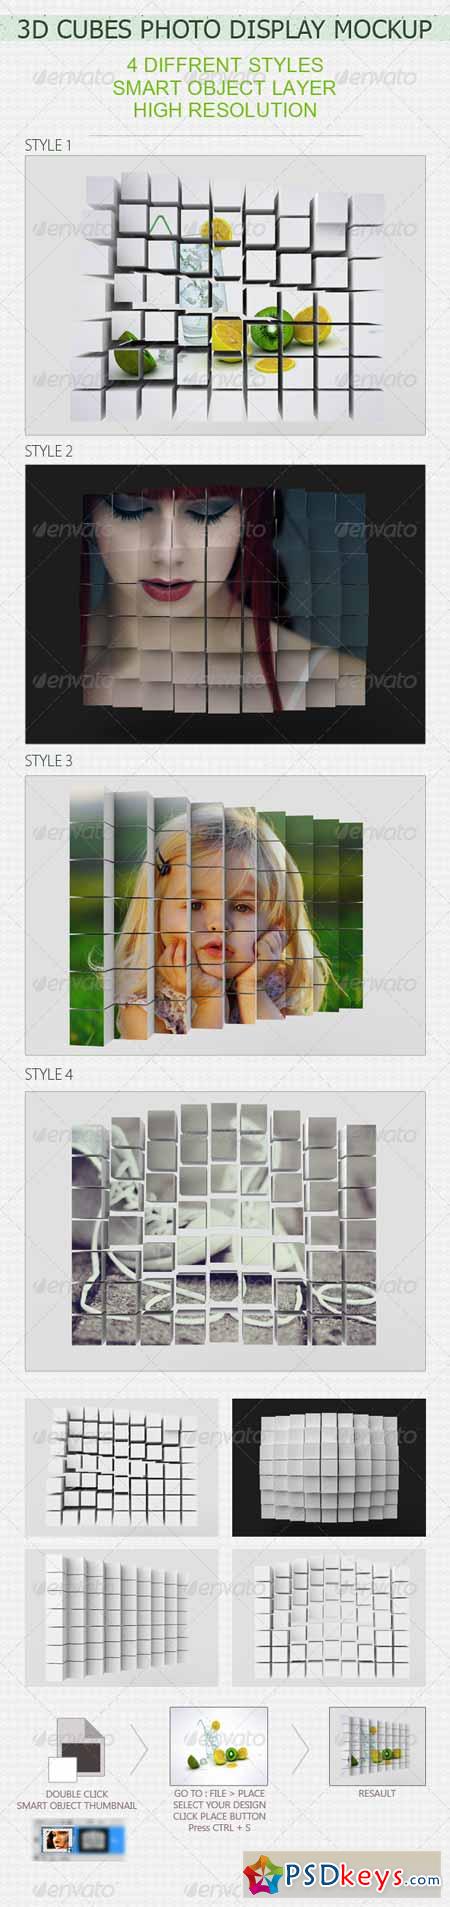 Download 3D Cubes Photo Display Mockup 4455936 » Free Download Photoshop Vector Stock image Via Torrent ...